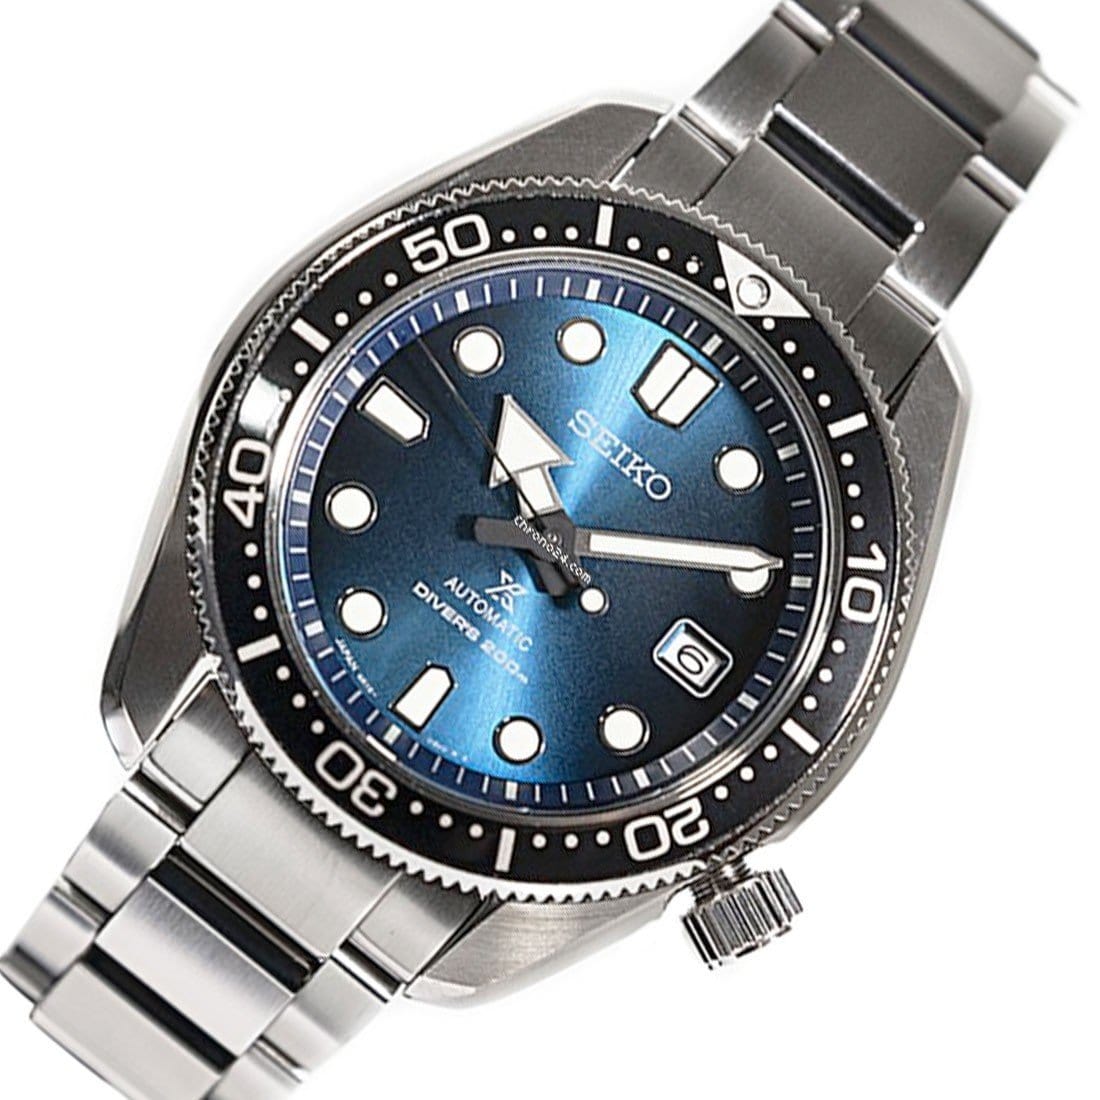 Seiko Automatic Prospex Divers 200m JDM Watch SBDC065